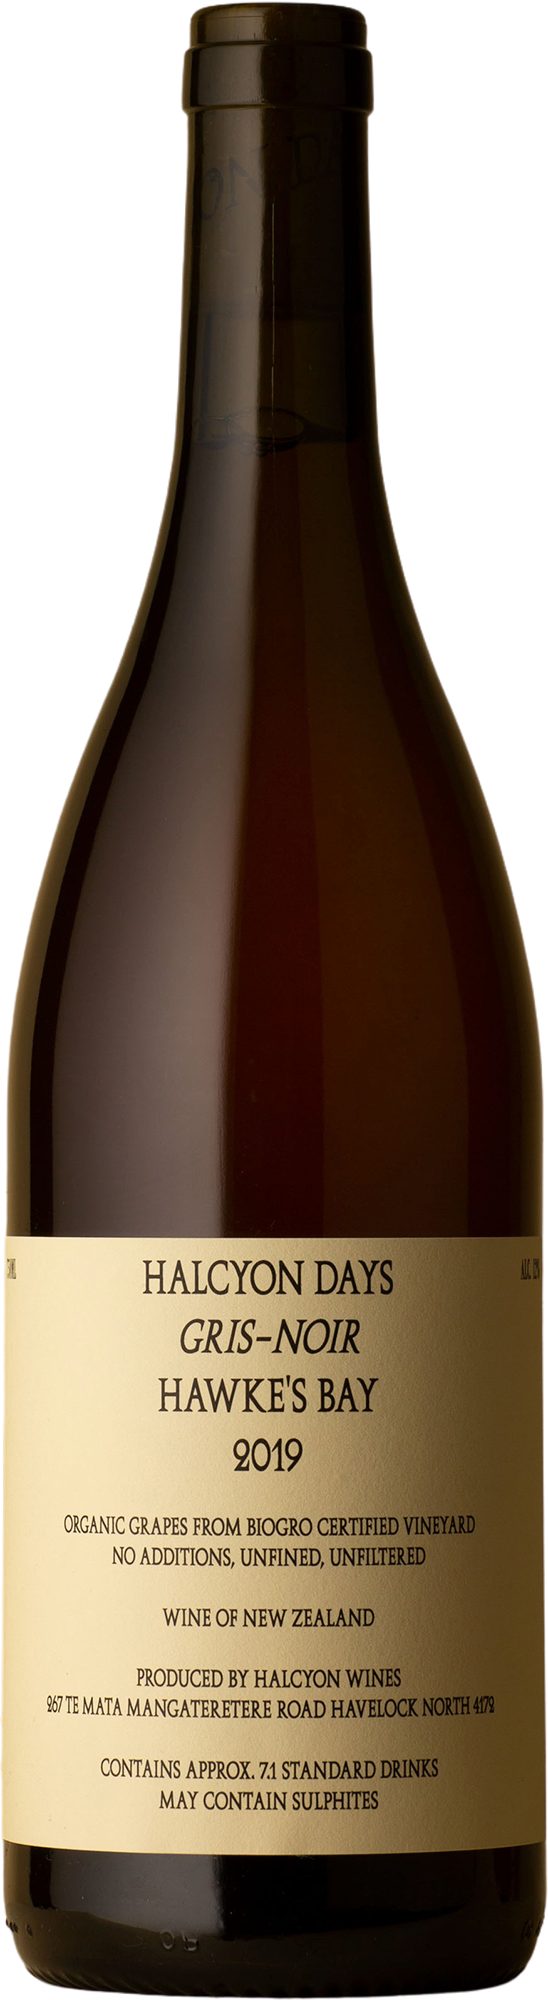 Halcyon Days - Gris-Noir Pinot Gris / Pinot Noir 2019 Orange Wine